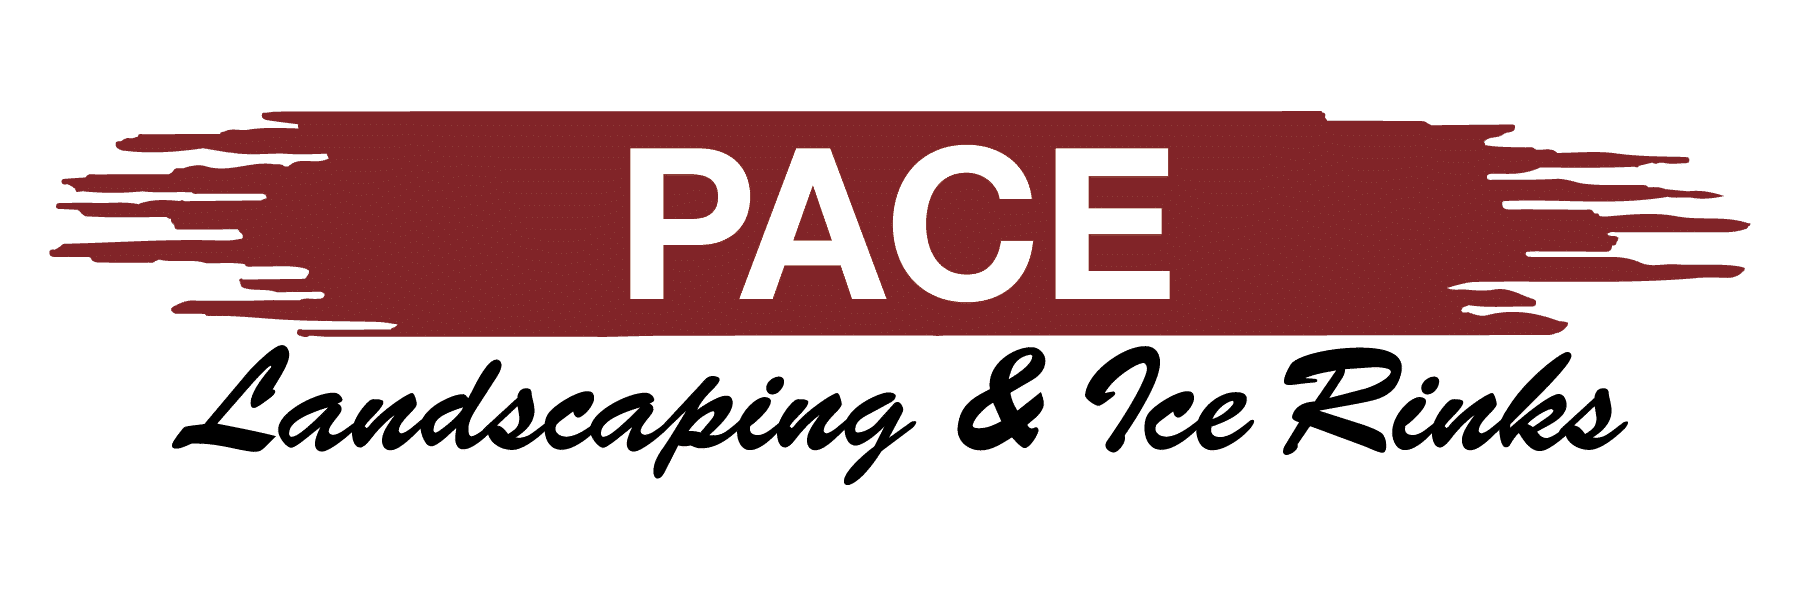 PaceLandscapingRinks logo RGB jobs for felons and felony record hub website